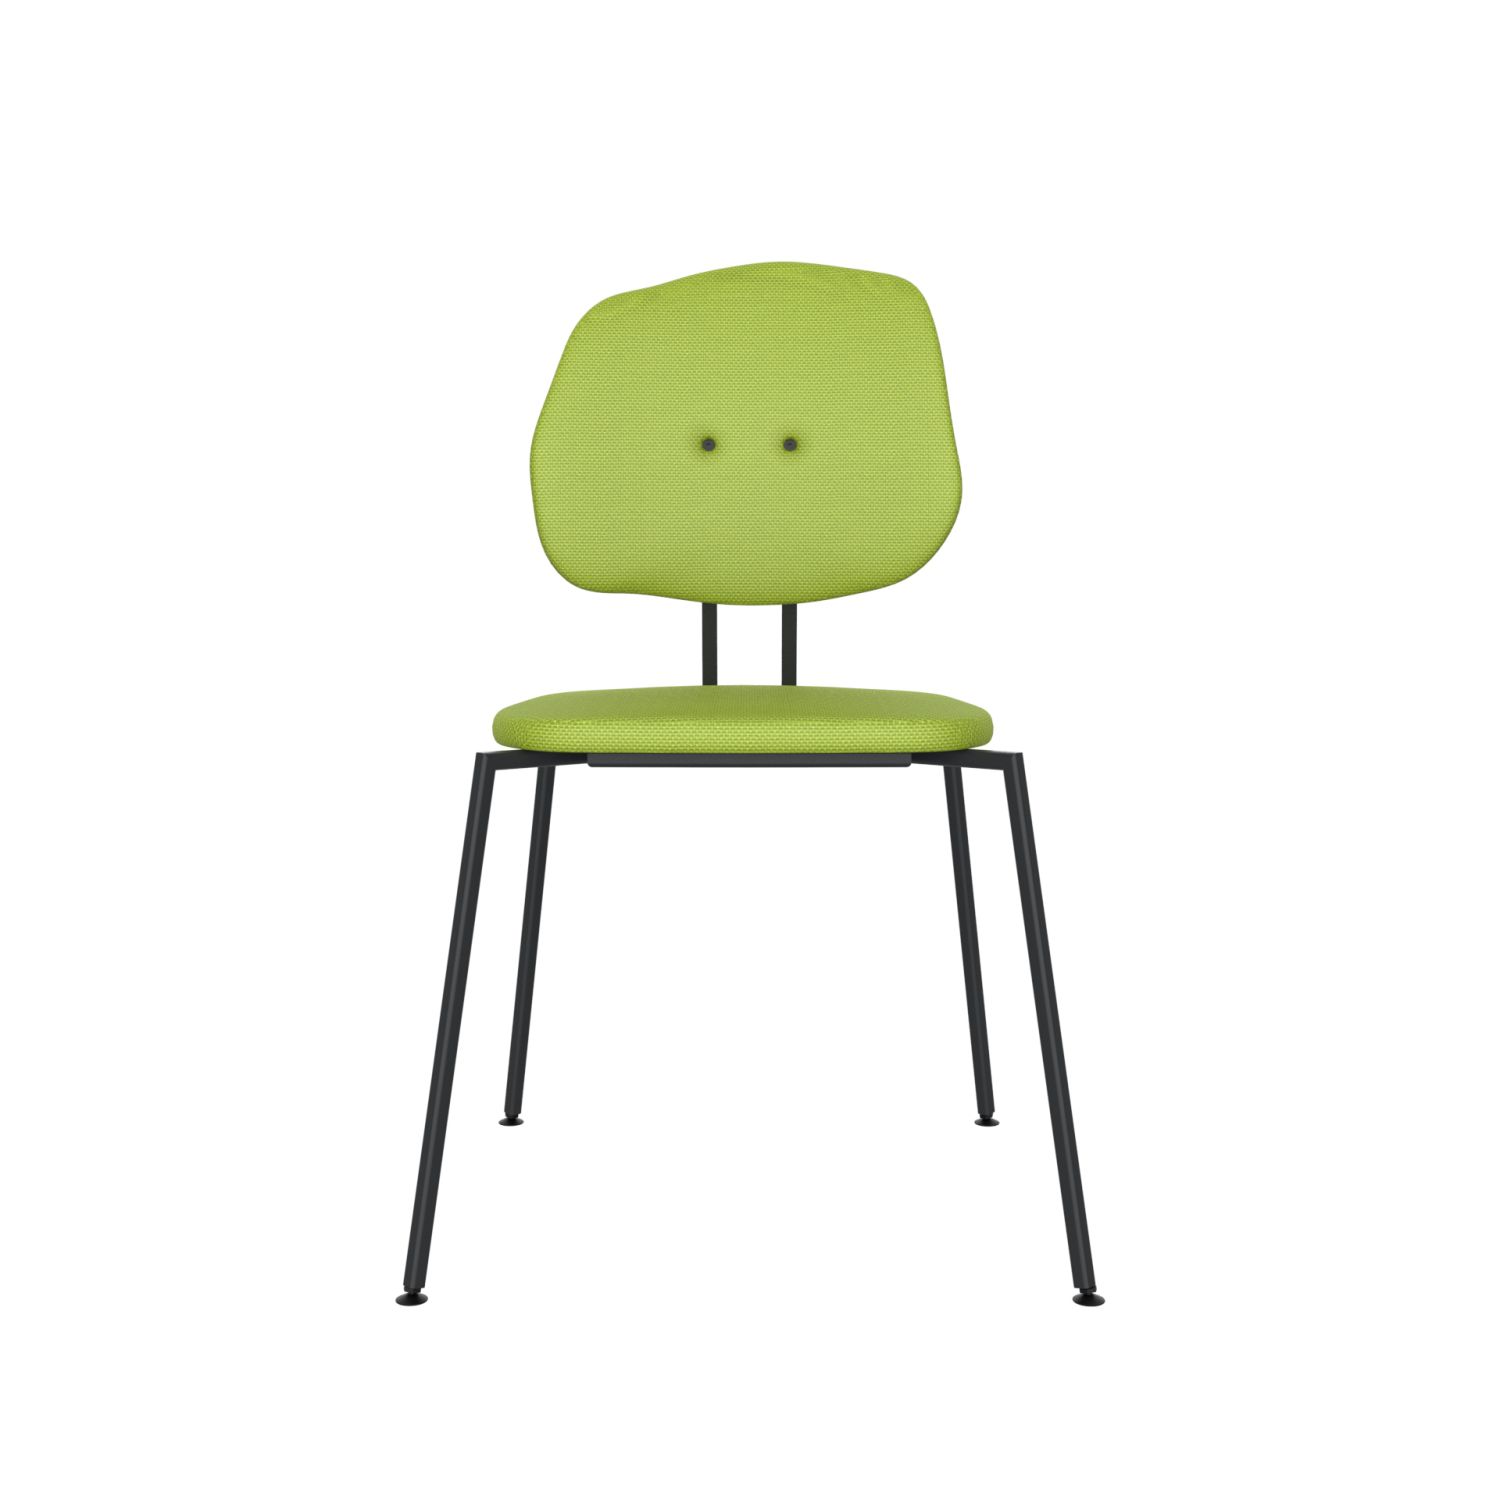 lensvelt maarten baas chair 141 stackable without armrests backrest g fairway green 020 black ral9005 hard leg ends